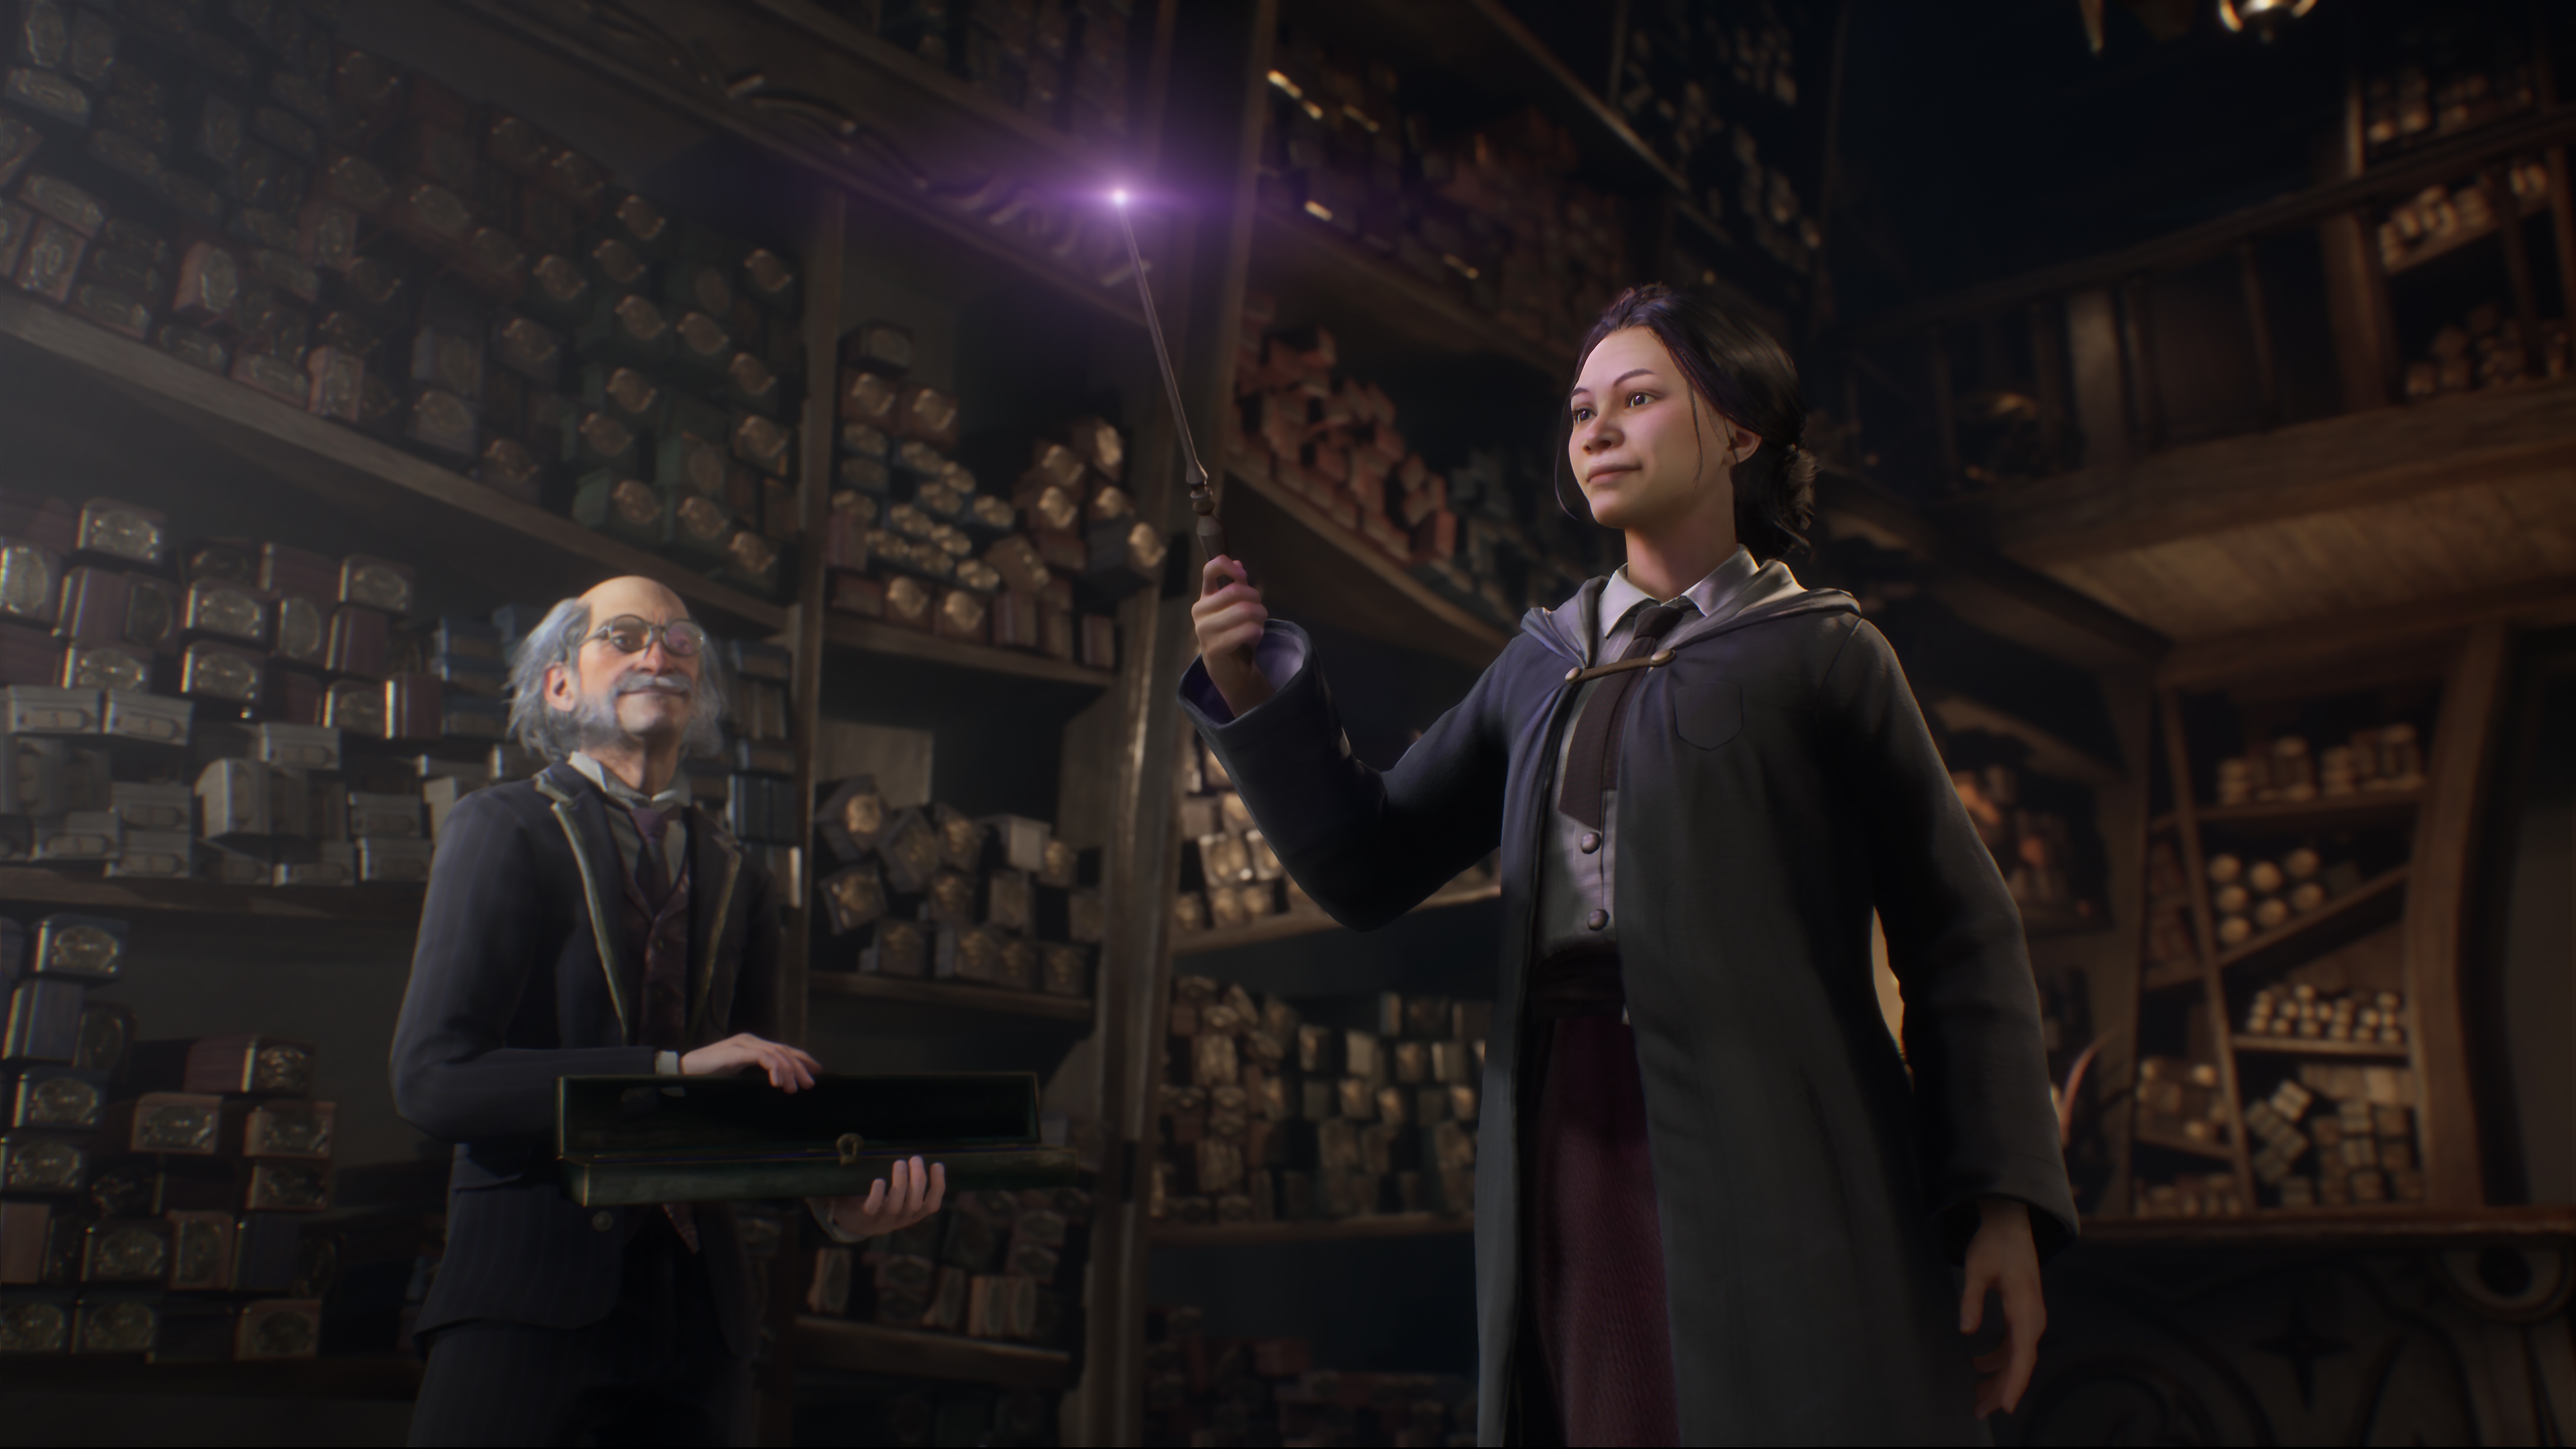 Hogwarts Legacy screenshot showing a student choosing their wand